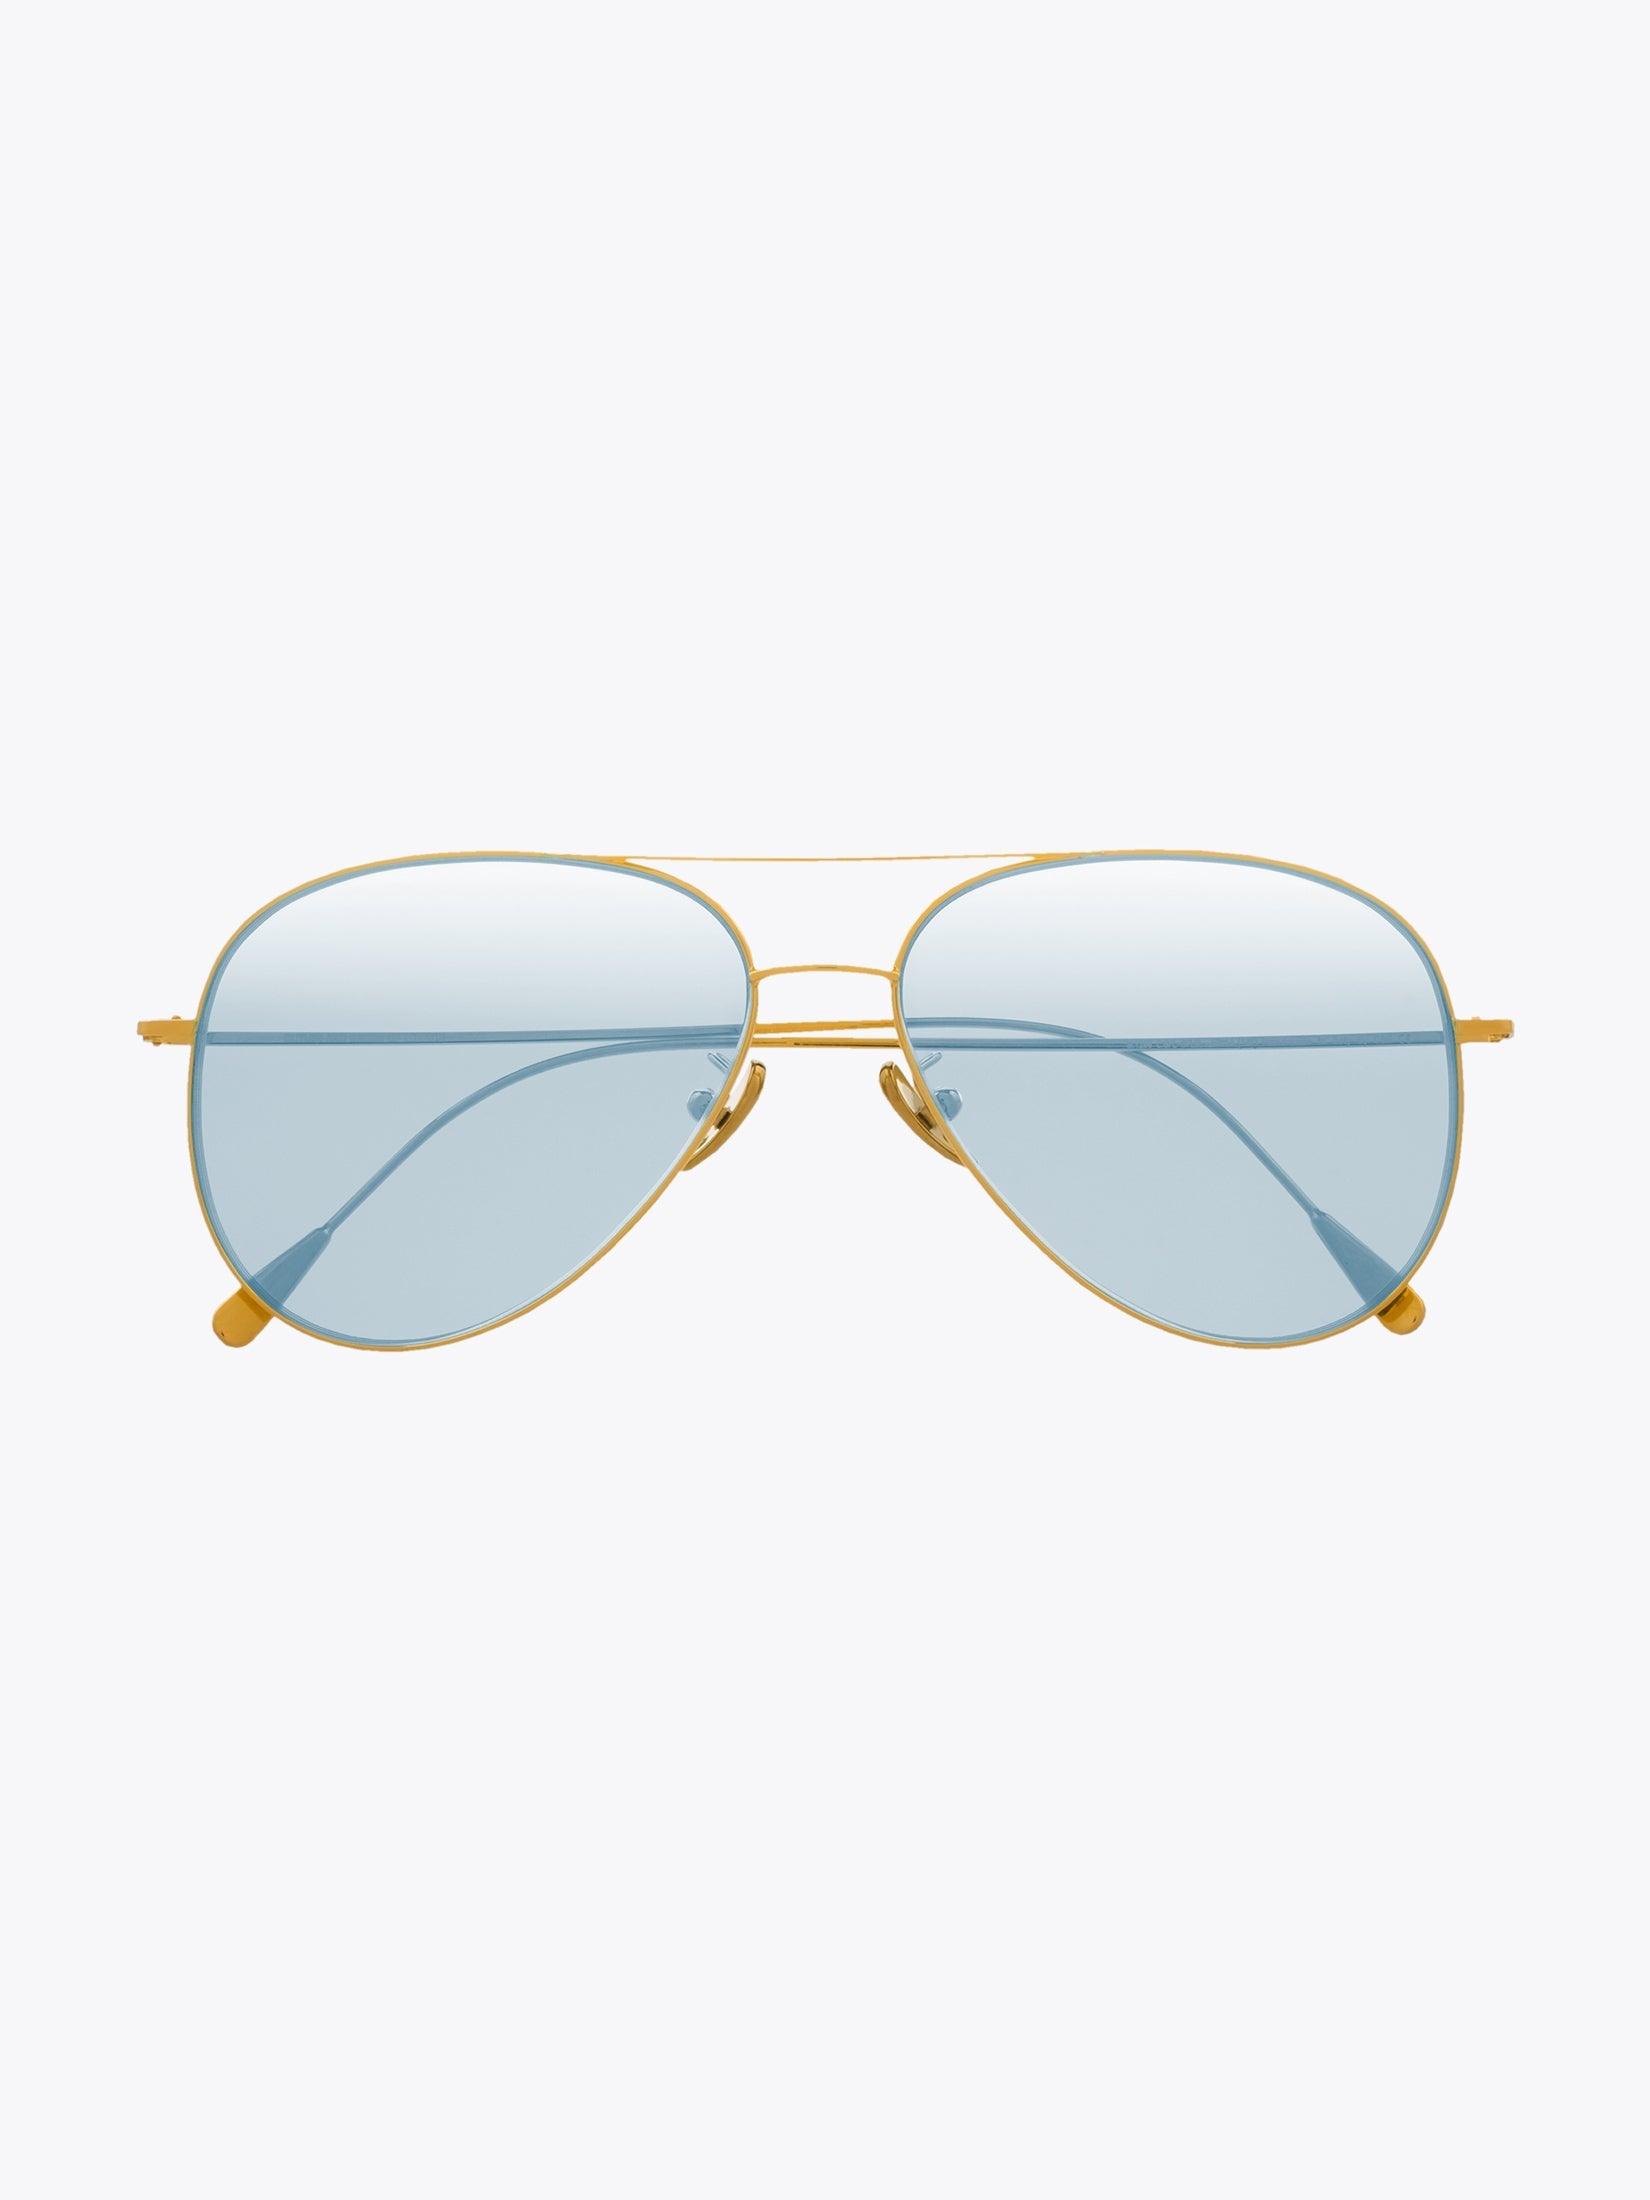 Cutler and Gross 1266 Gold Sunglasses